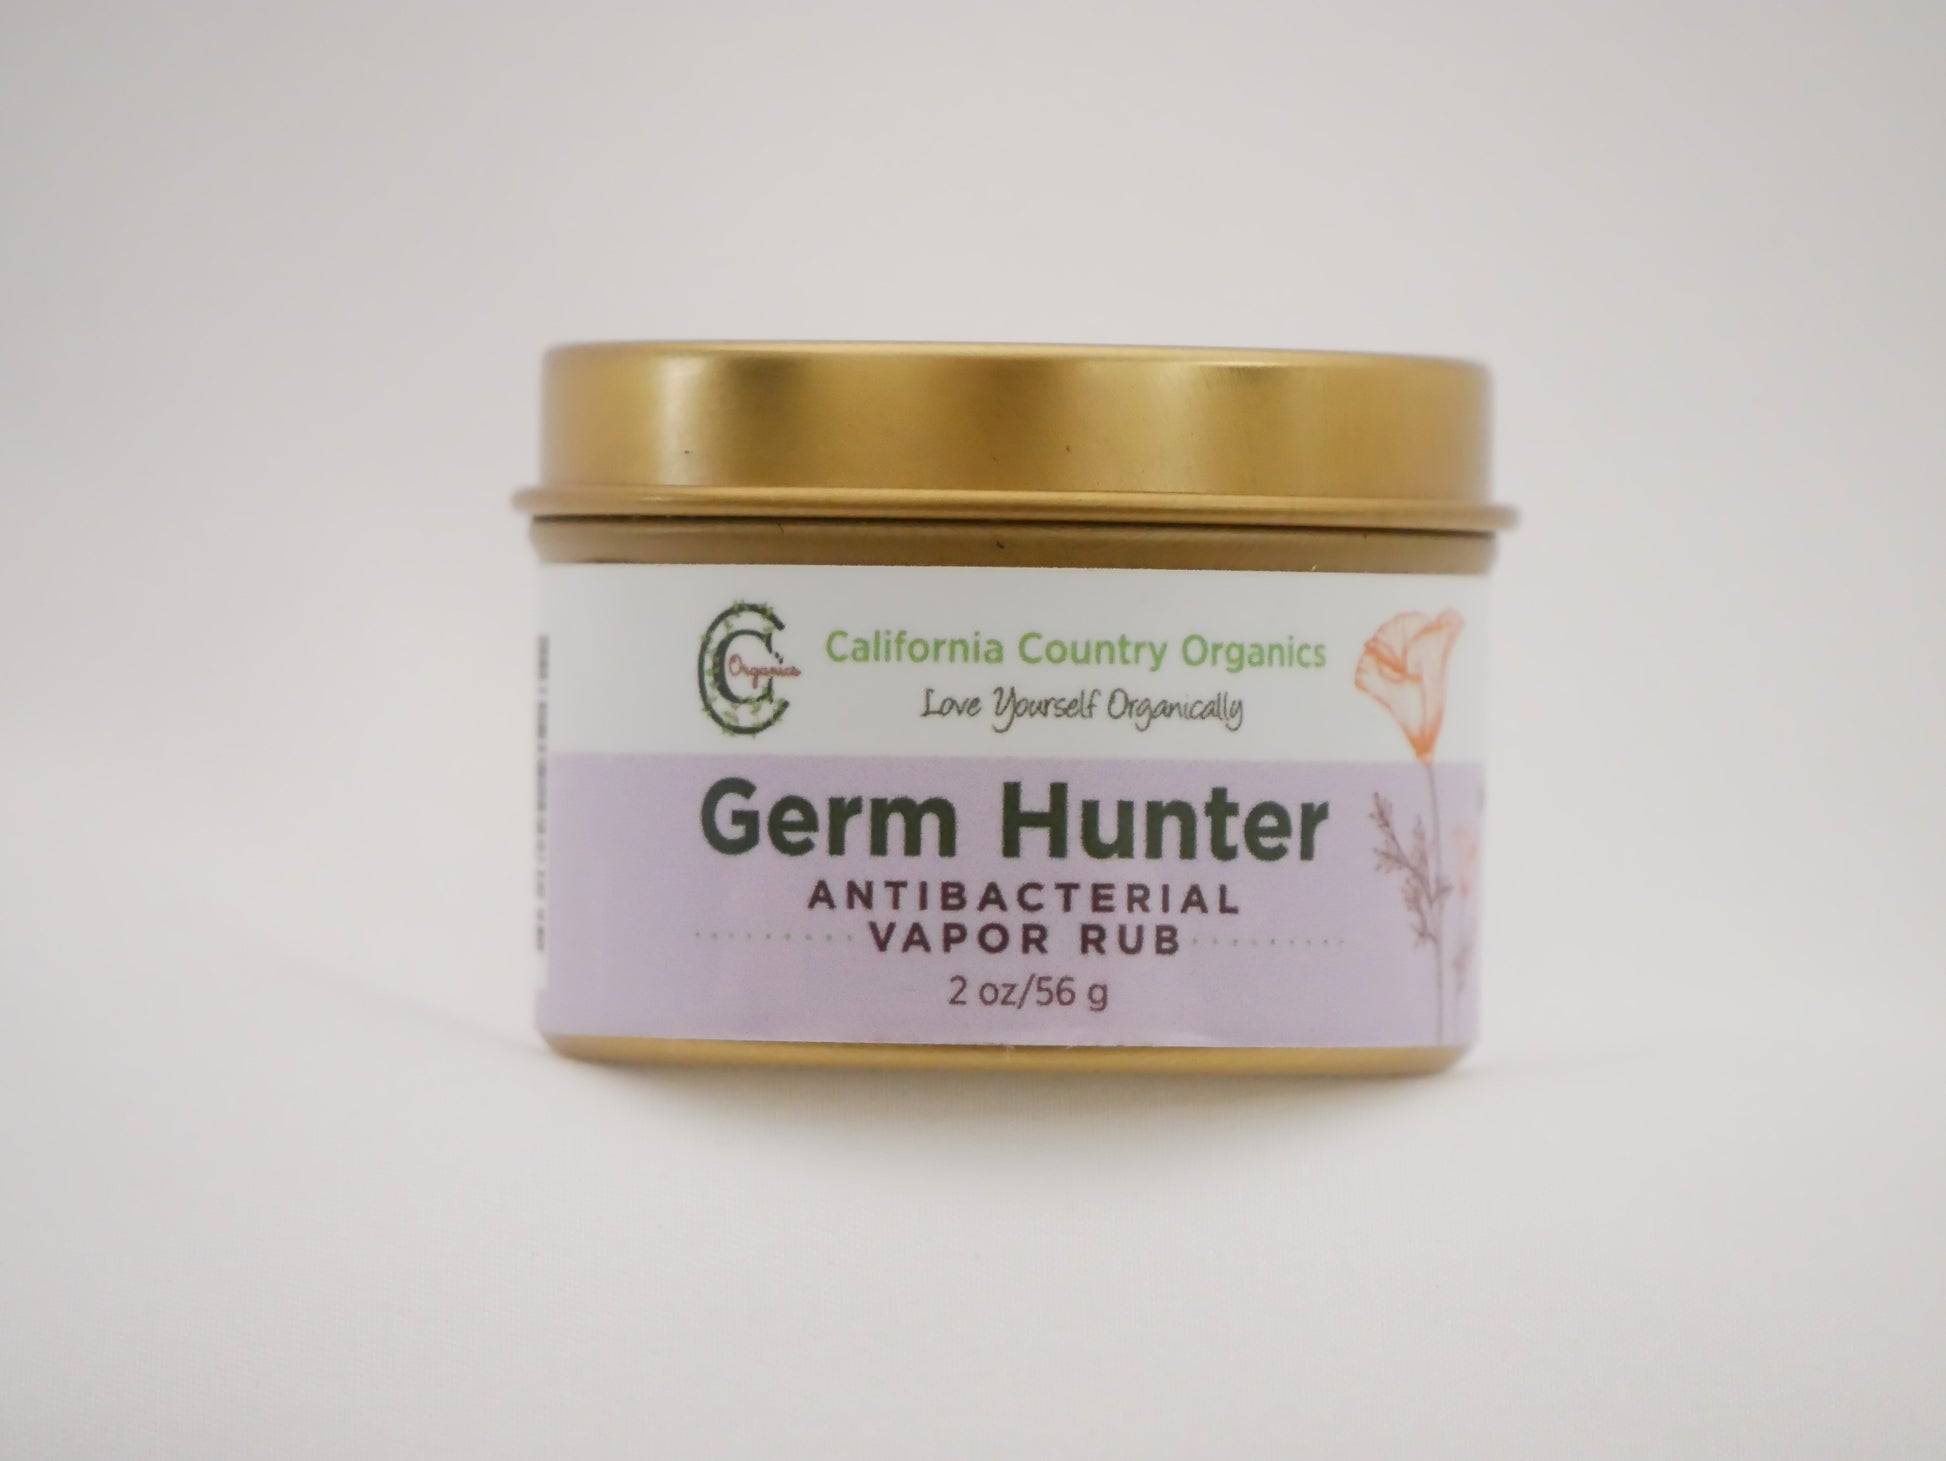 California Country Organics Germ Hunter